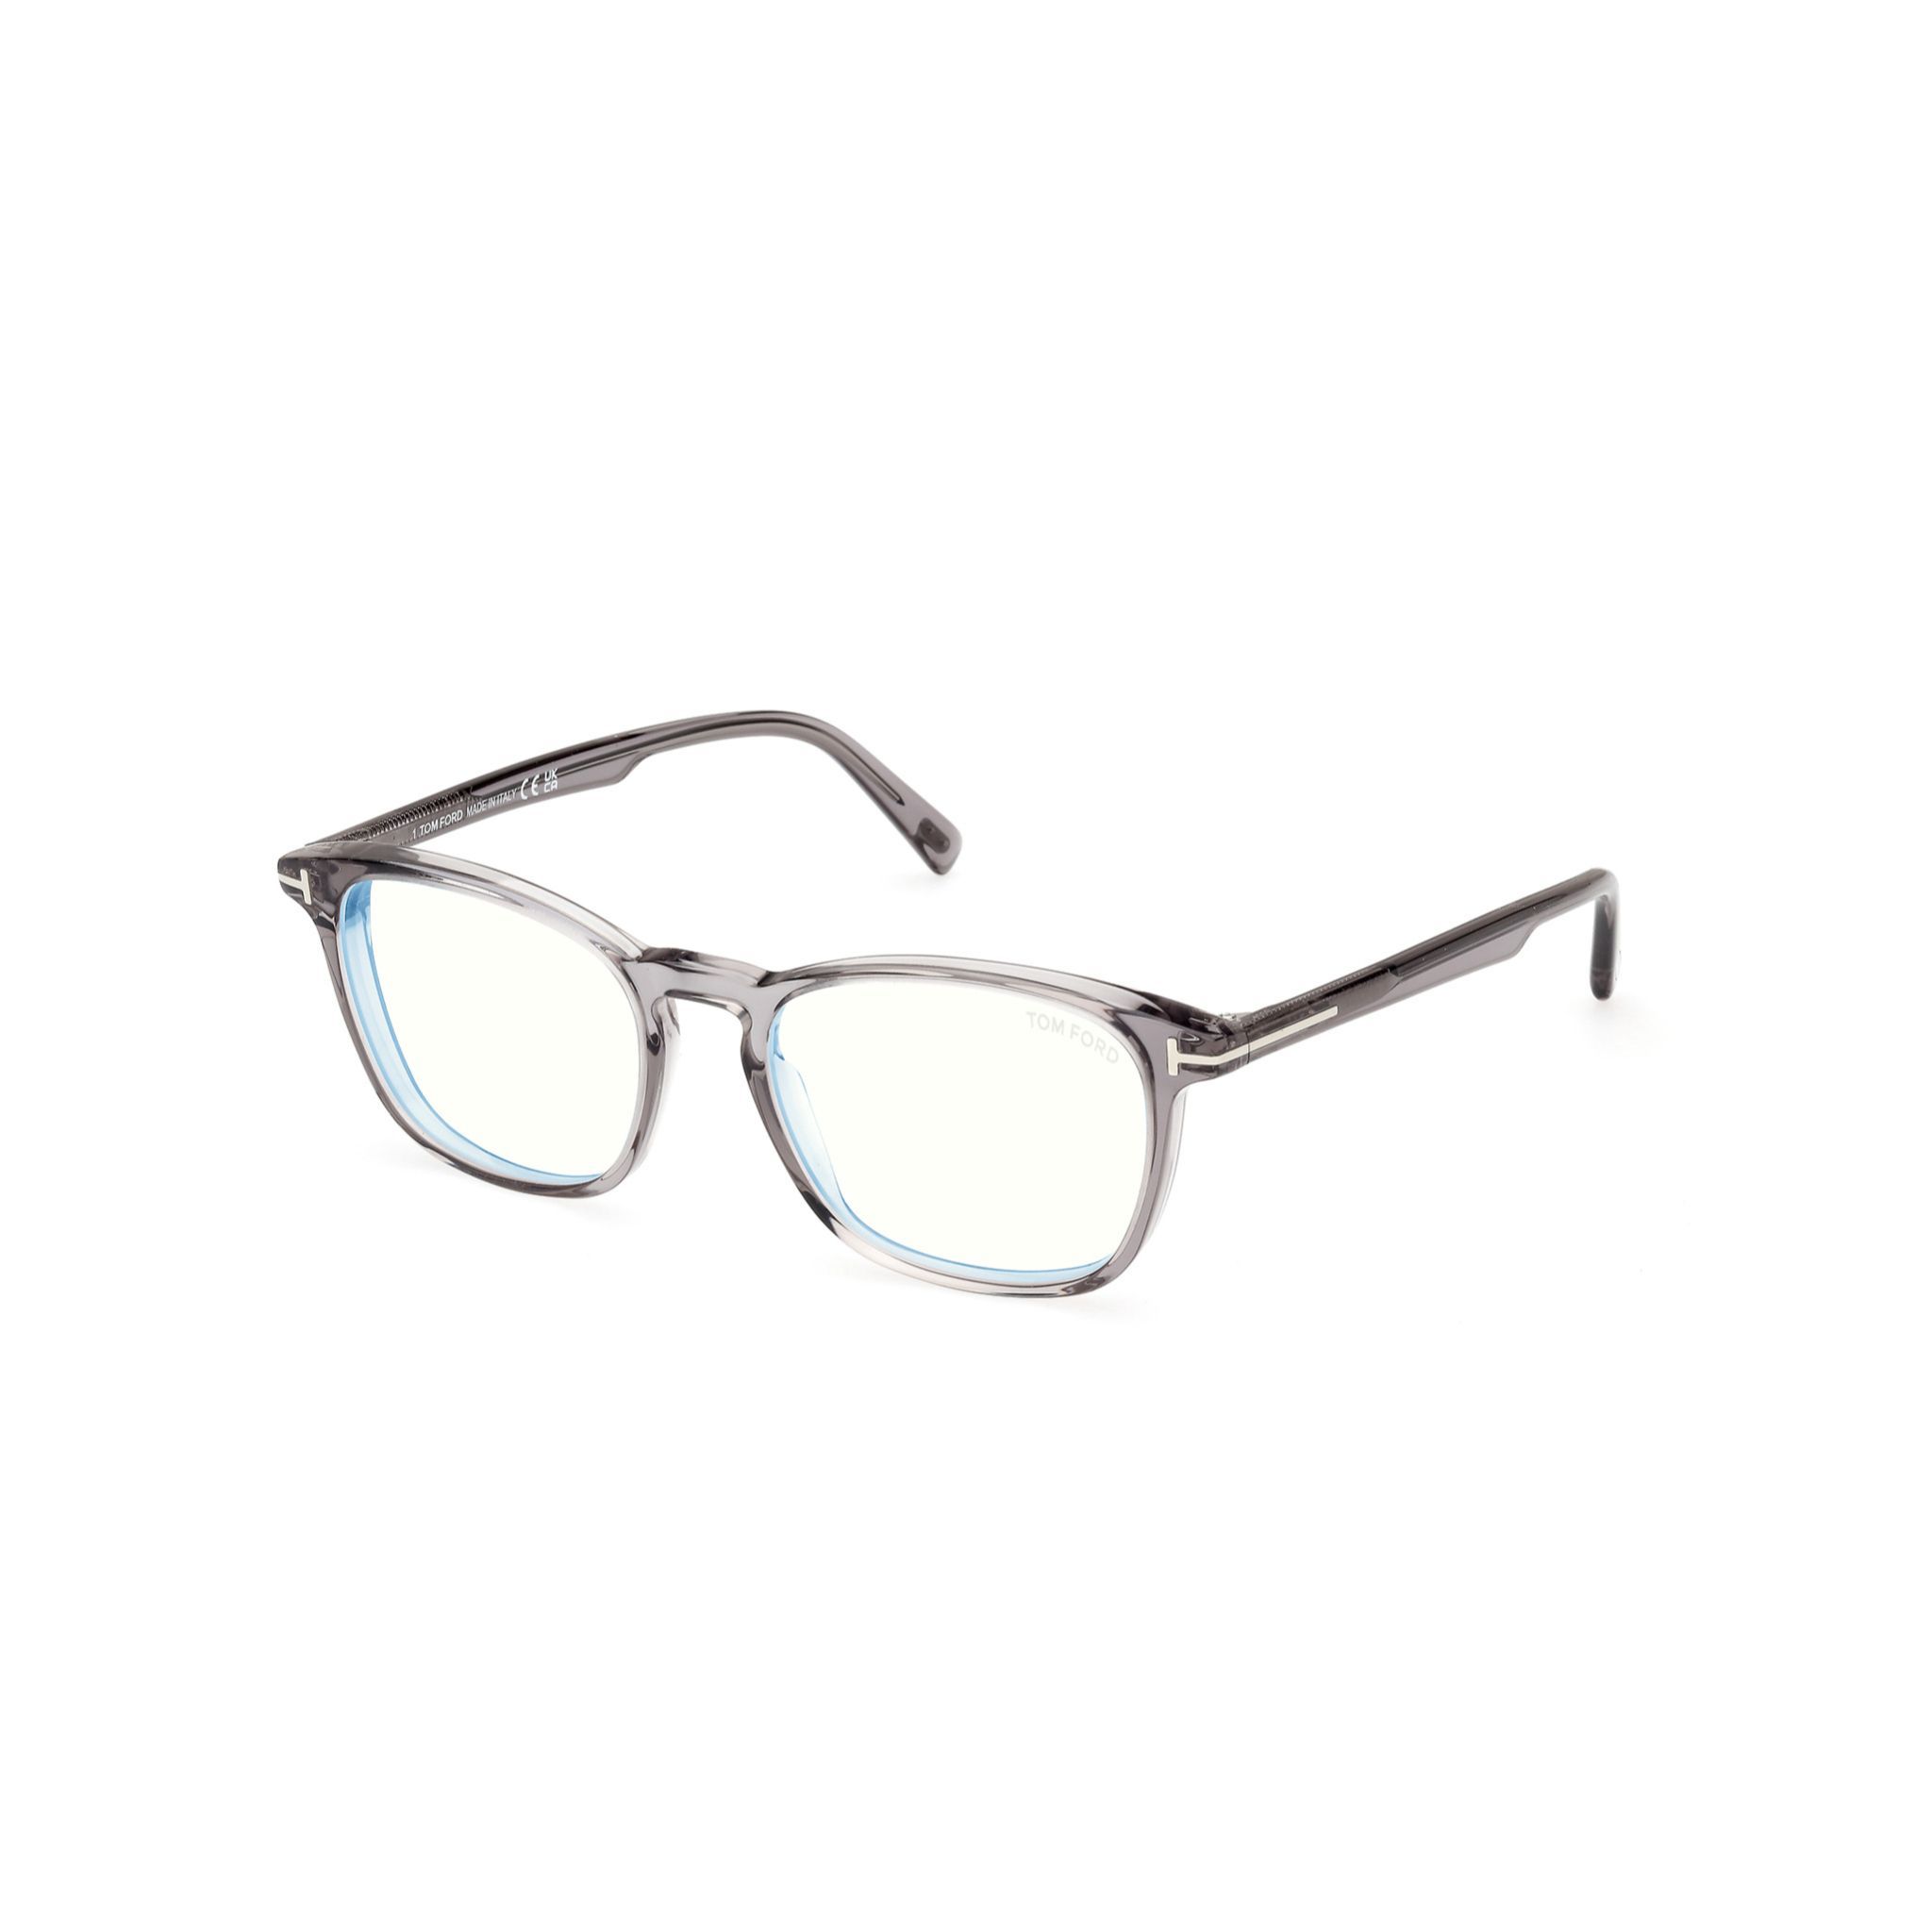 FT5960 Square Eyeglasses B020 - size 52